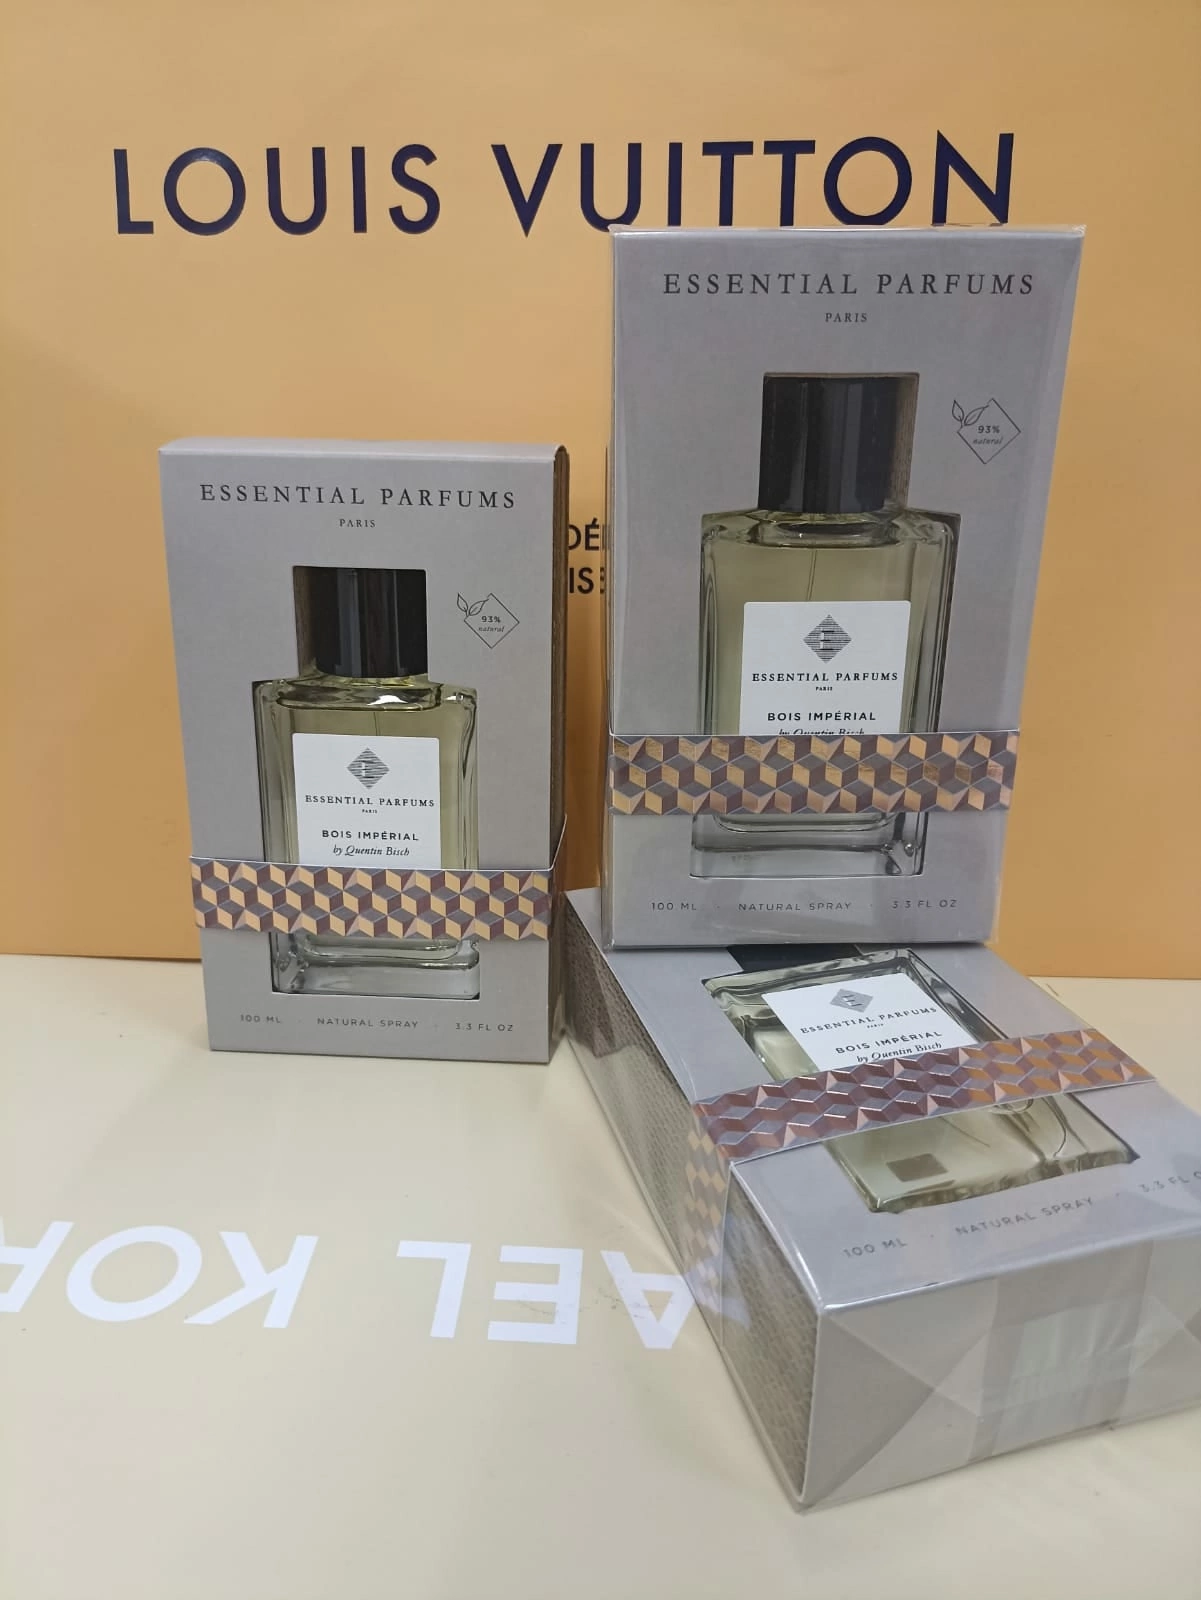 Essential parfums bois imperial оригинал